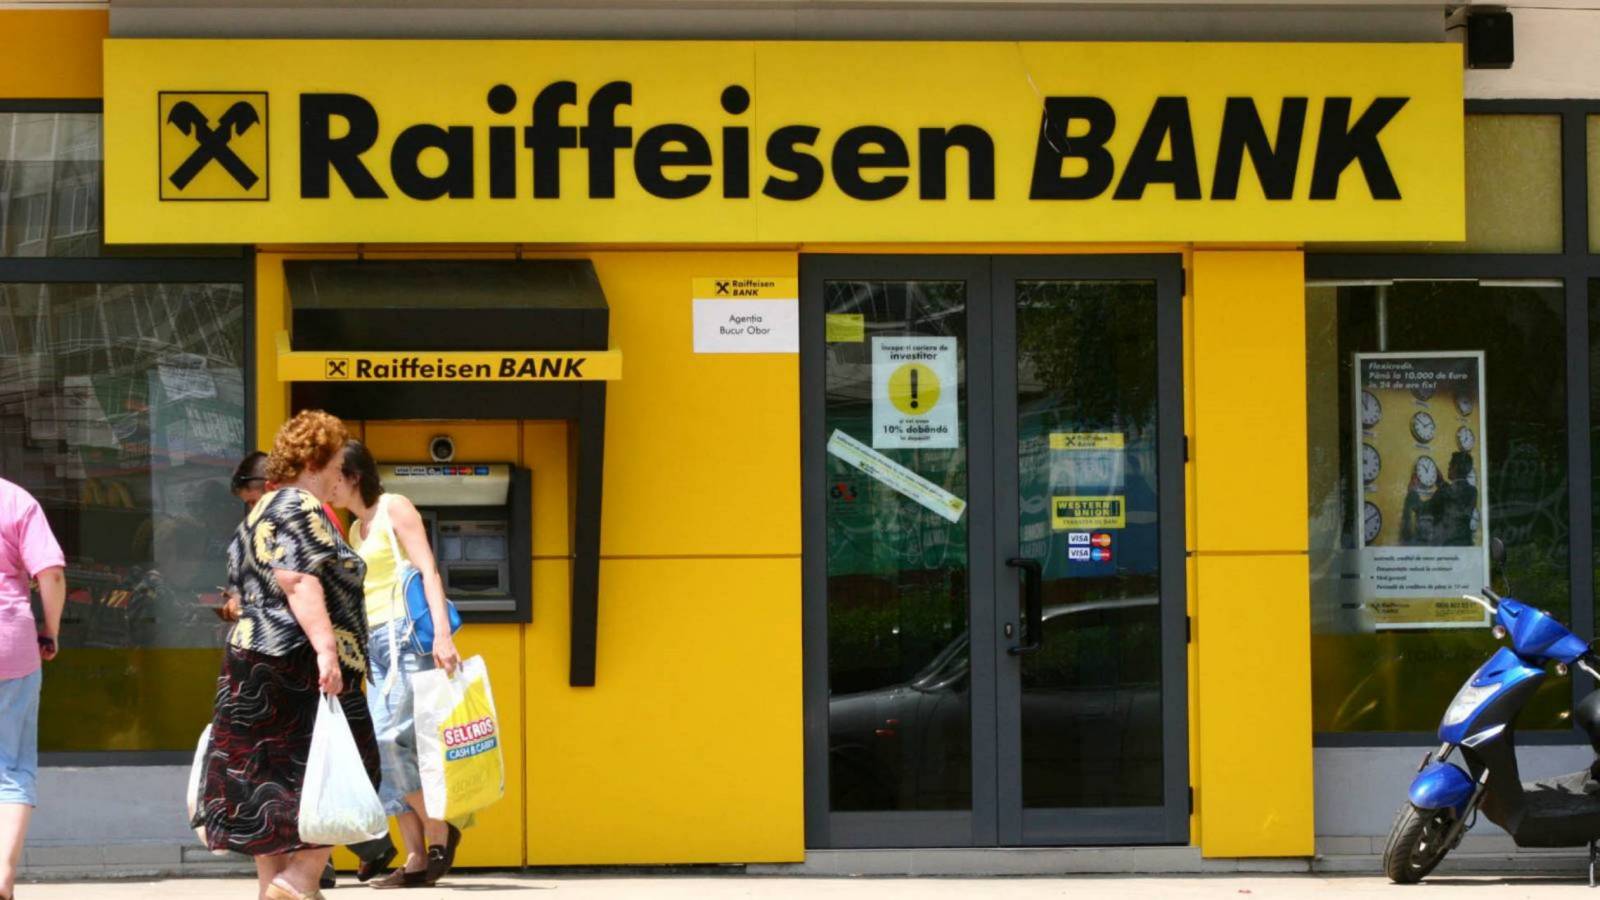 Raiffeisen Bank-codes